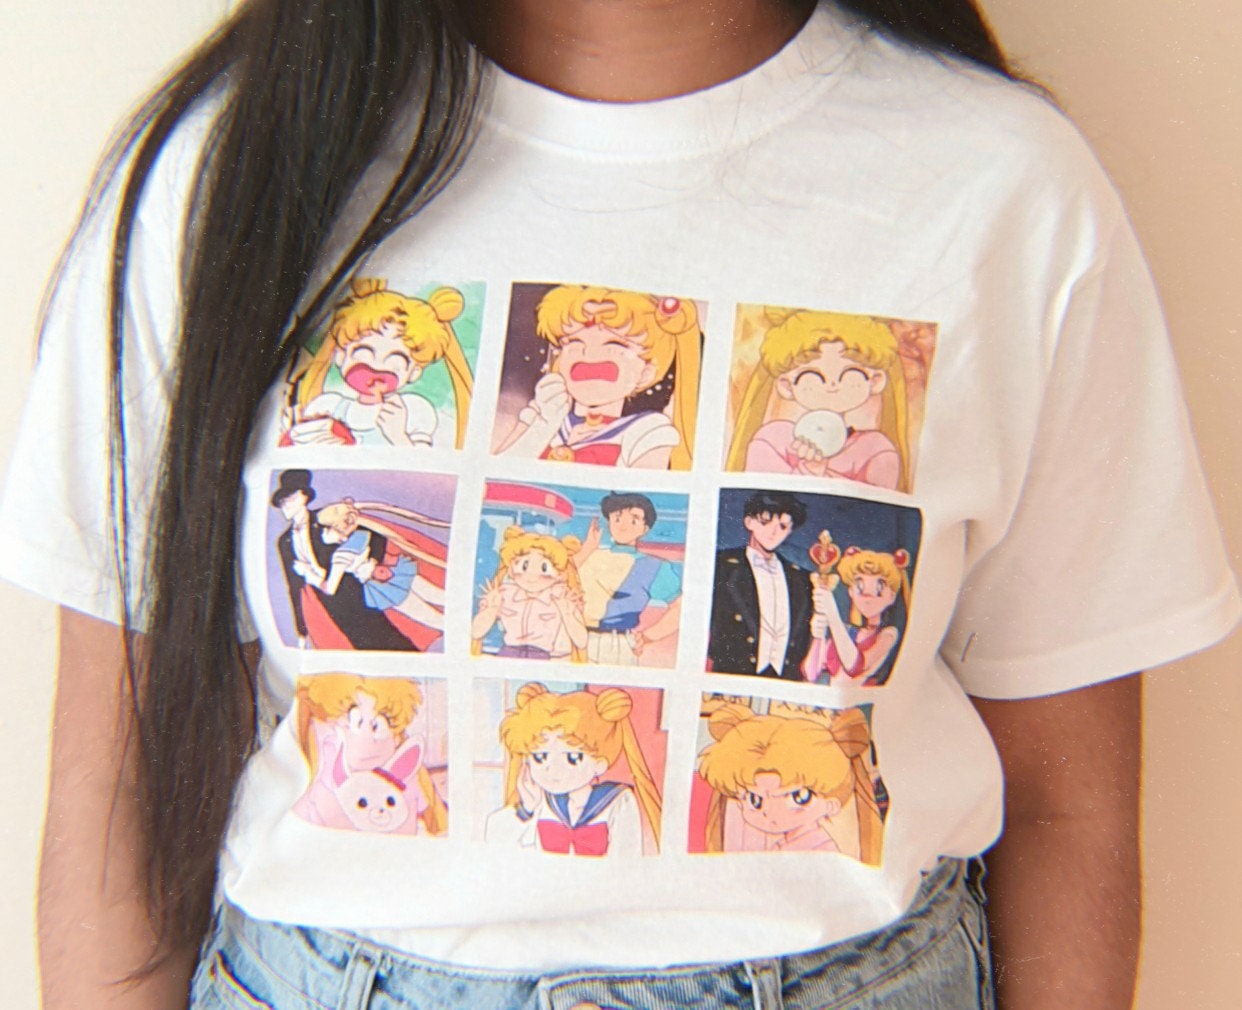 Sailor moon T shirt